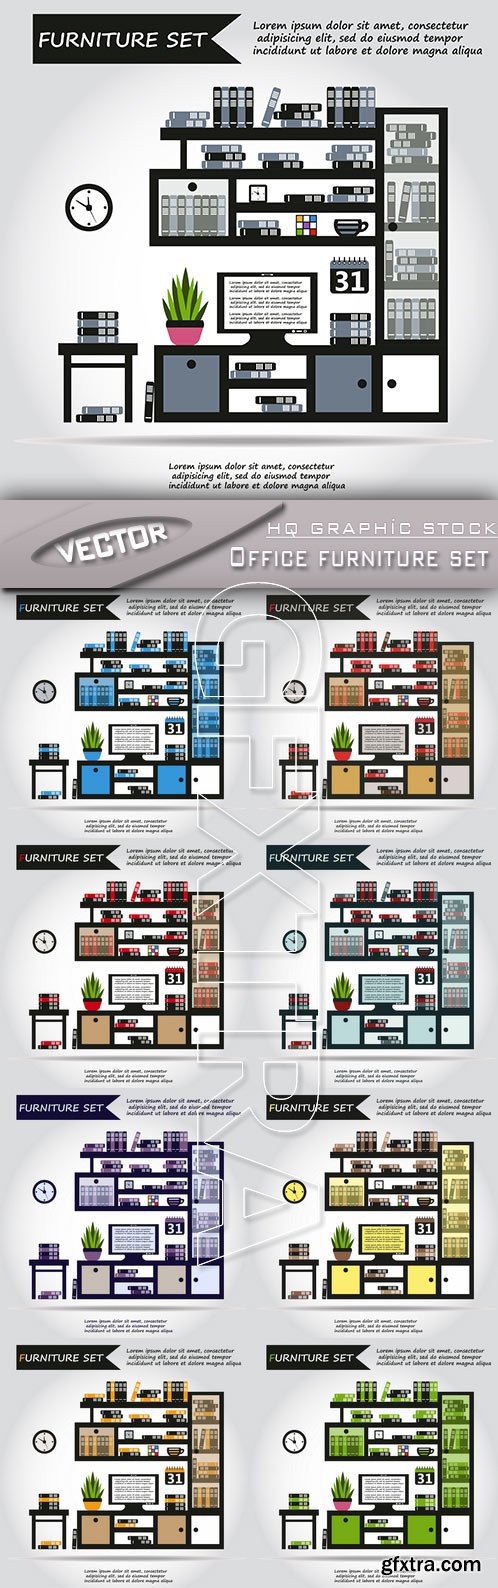 Stock Vector - Office furniture set